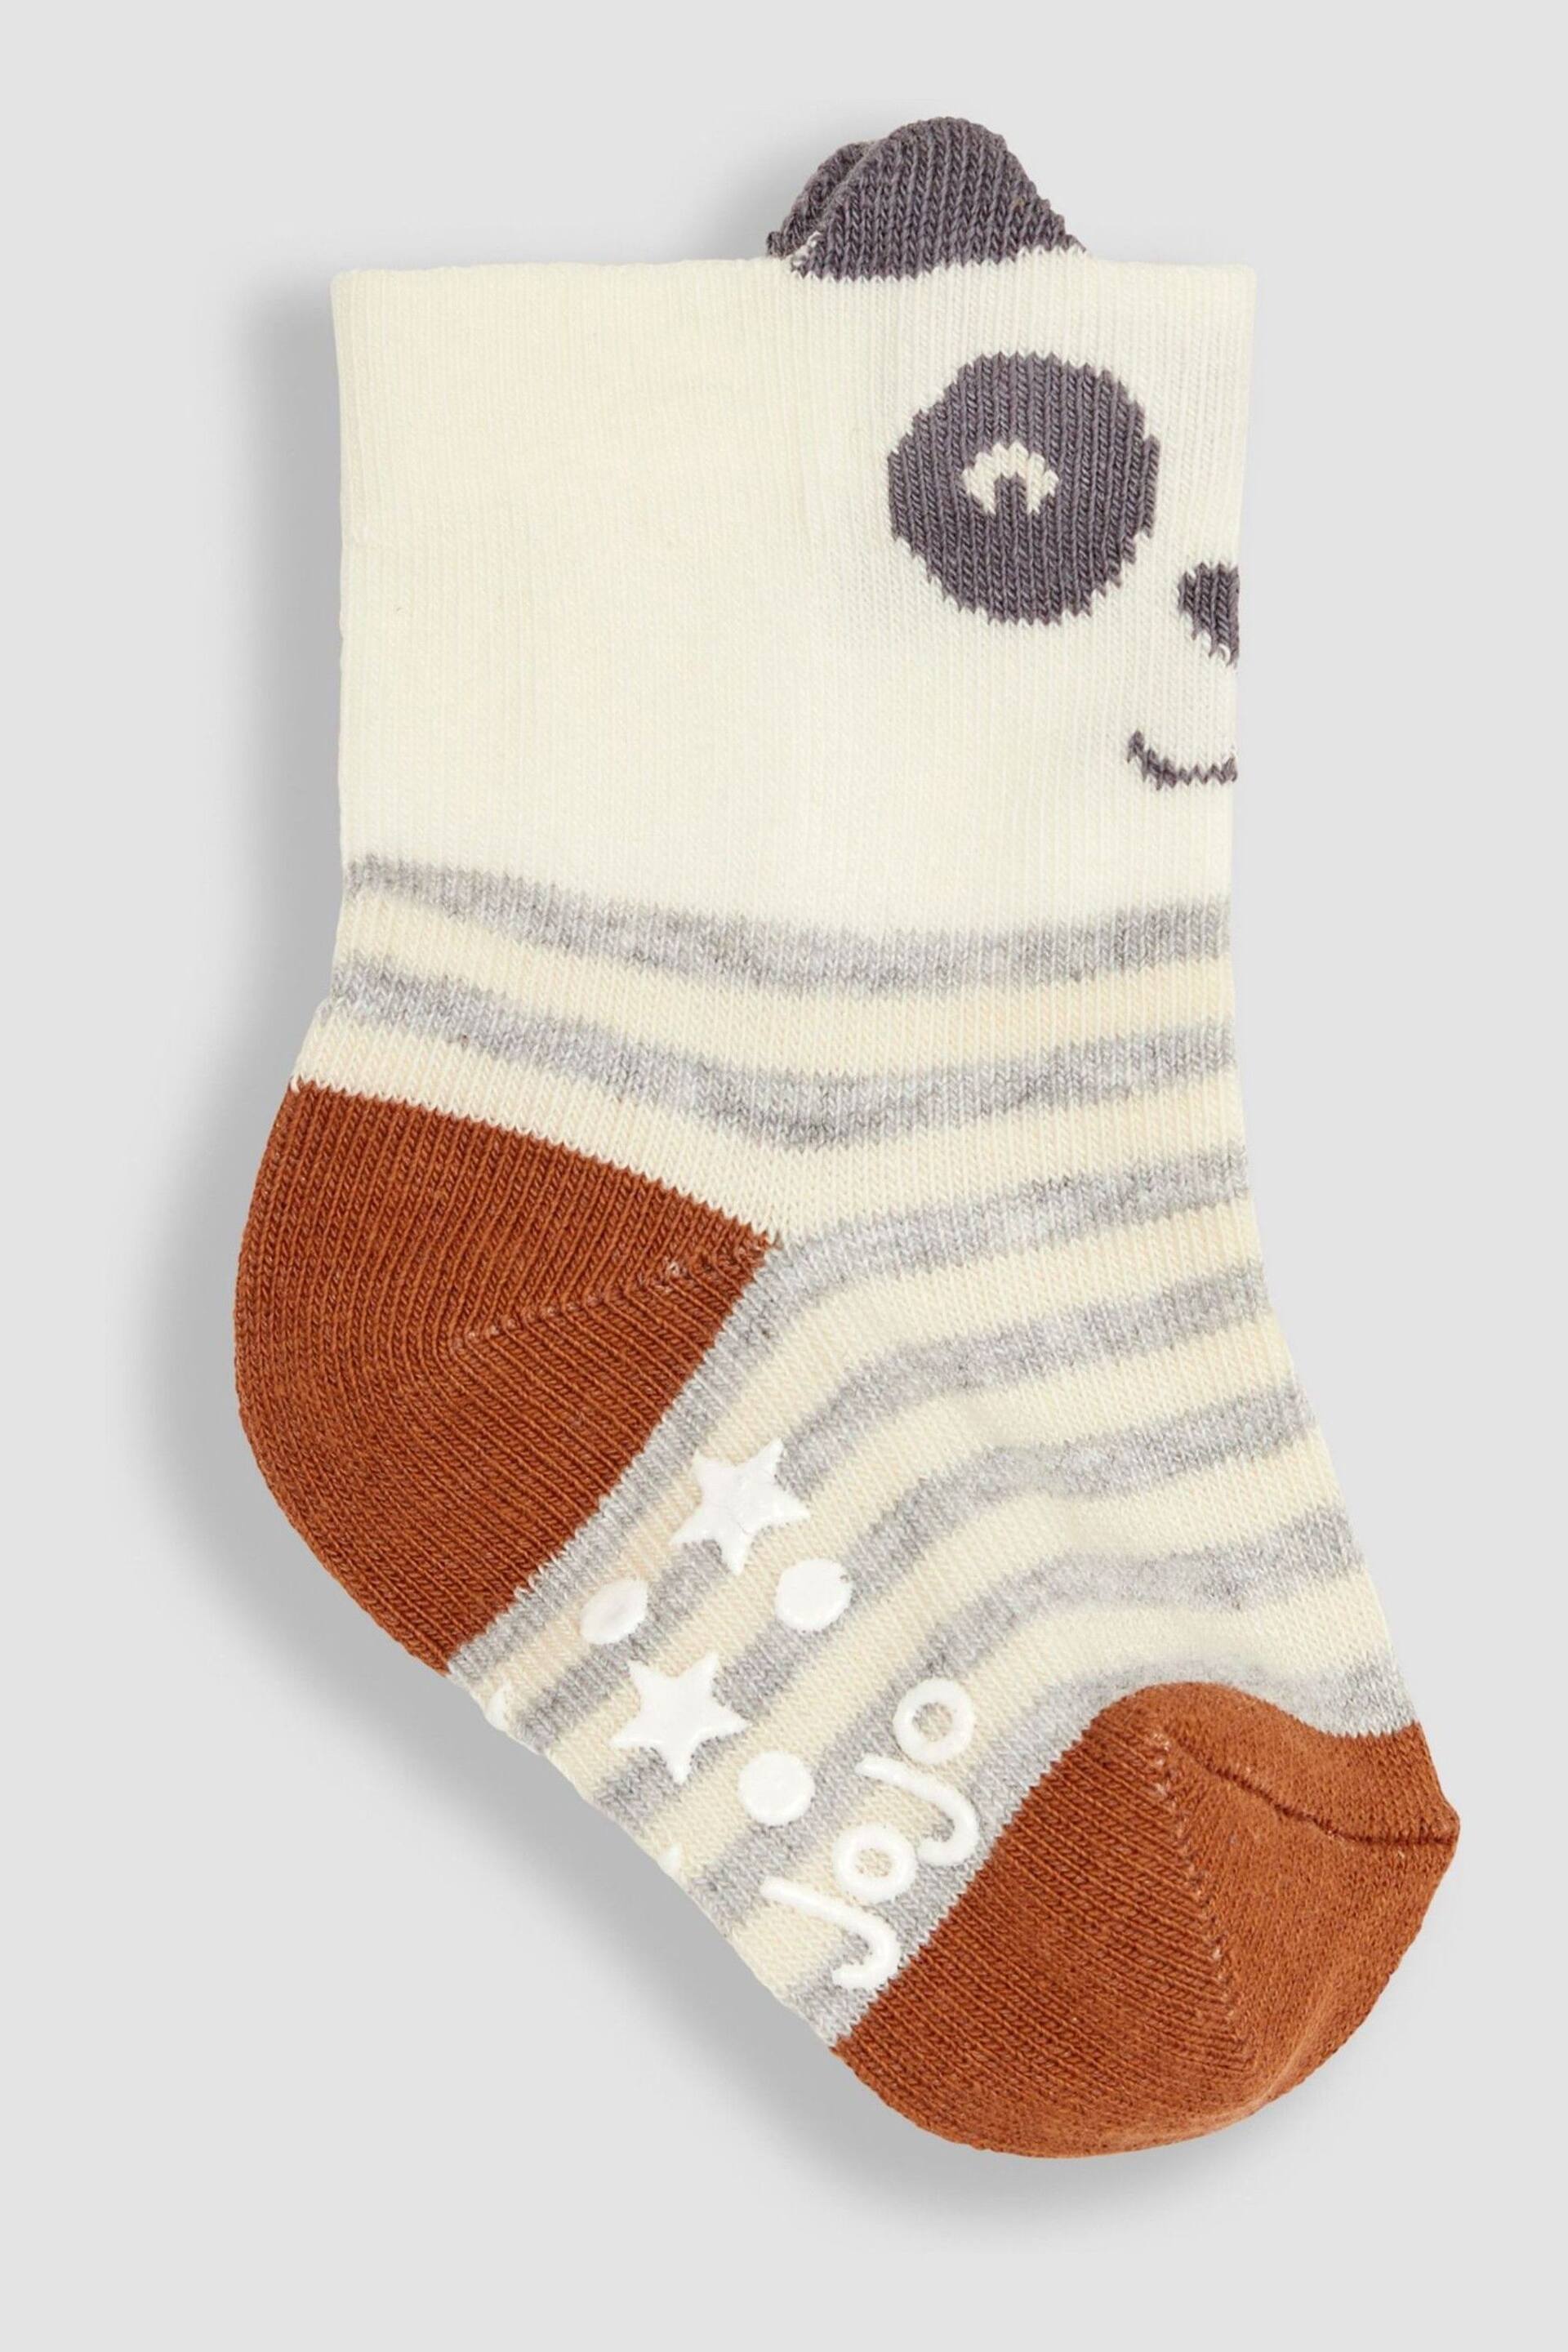 JoJo Maman Bébé Grey 3-Pack Safari Socks - Image 2 of 4